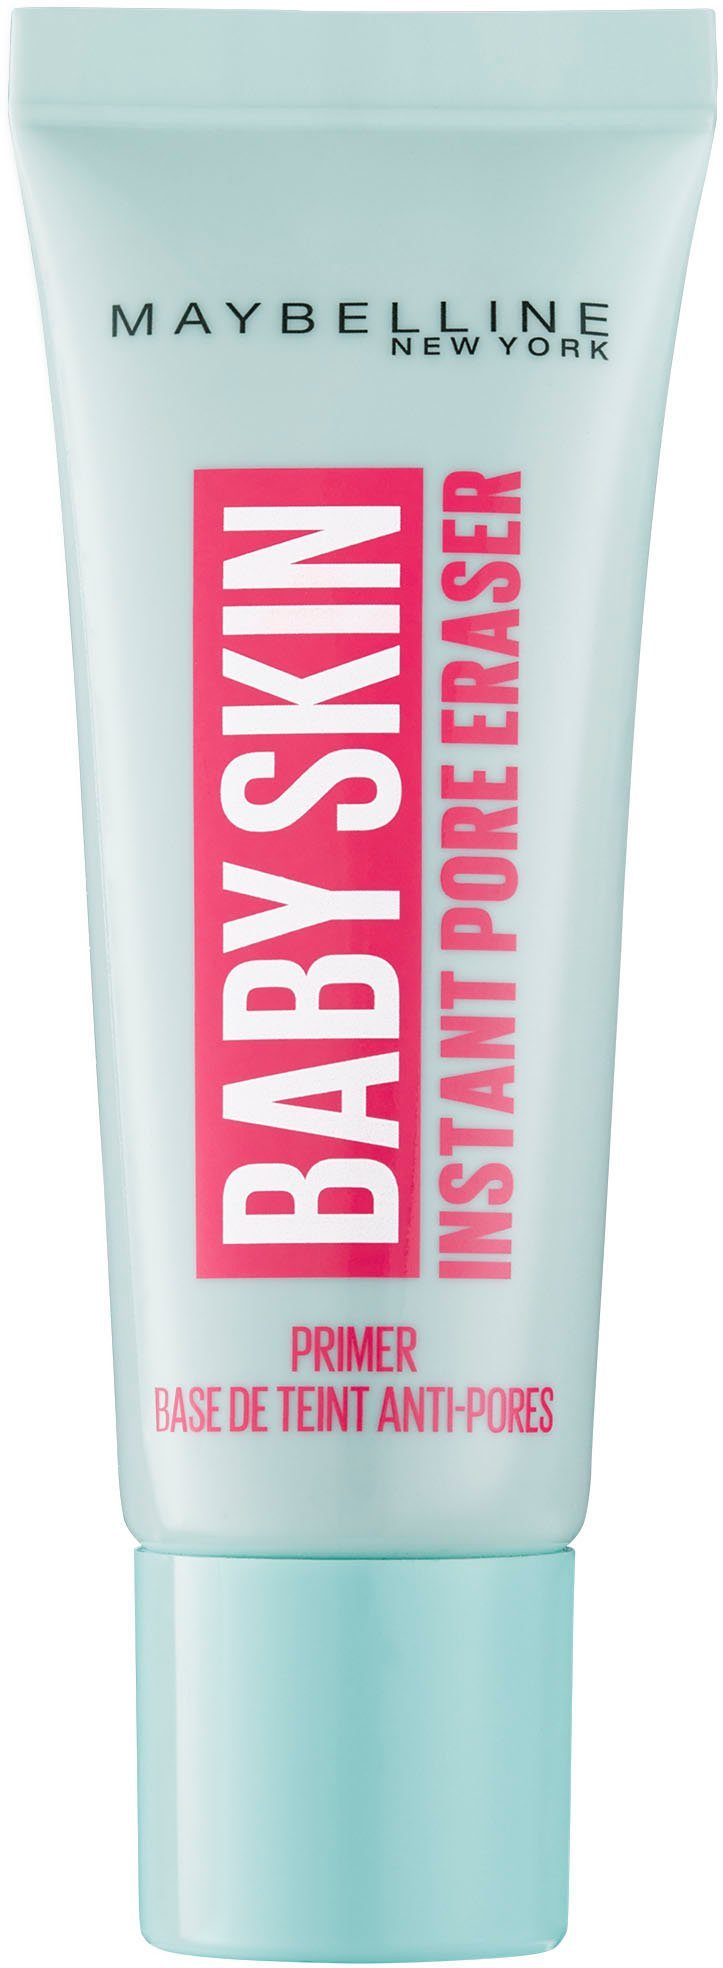 Primer Skin YORK MAYBELLINE NEW Baby